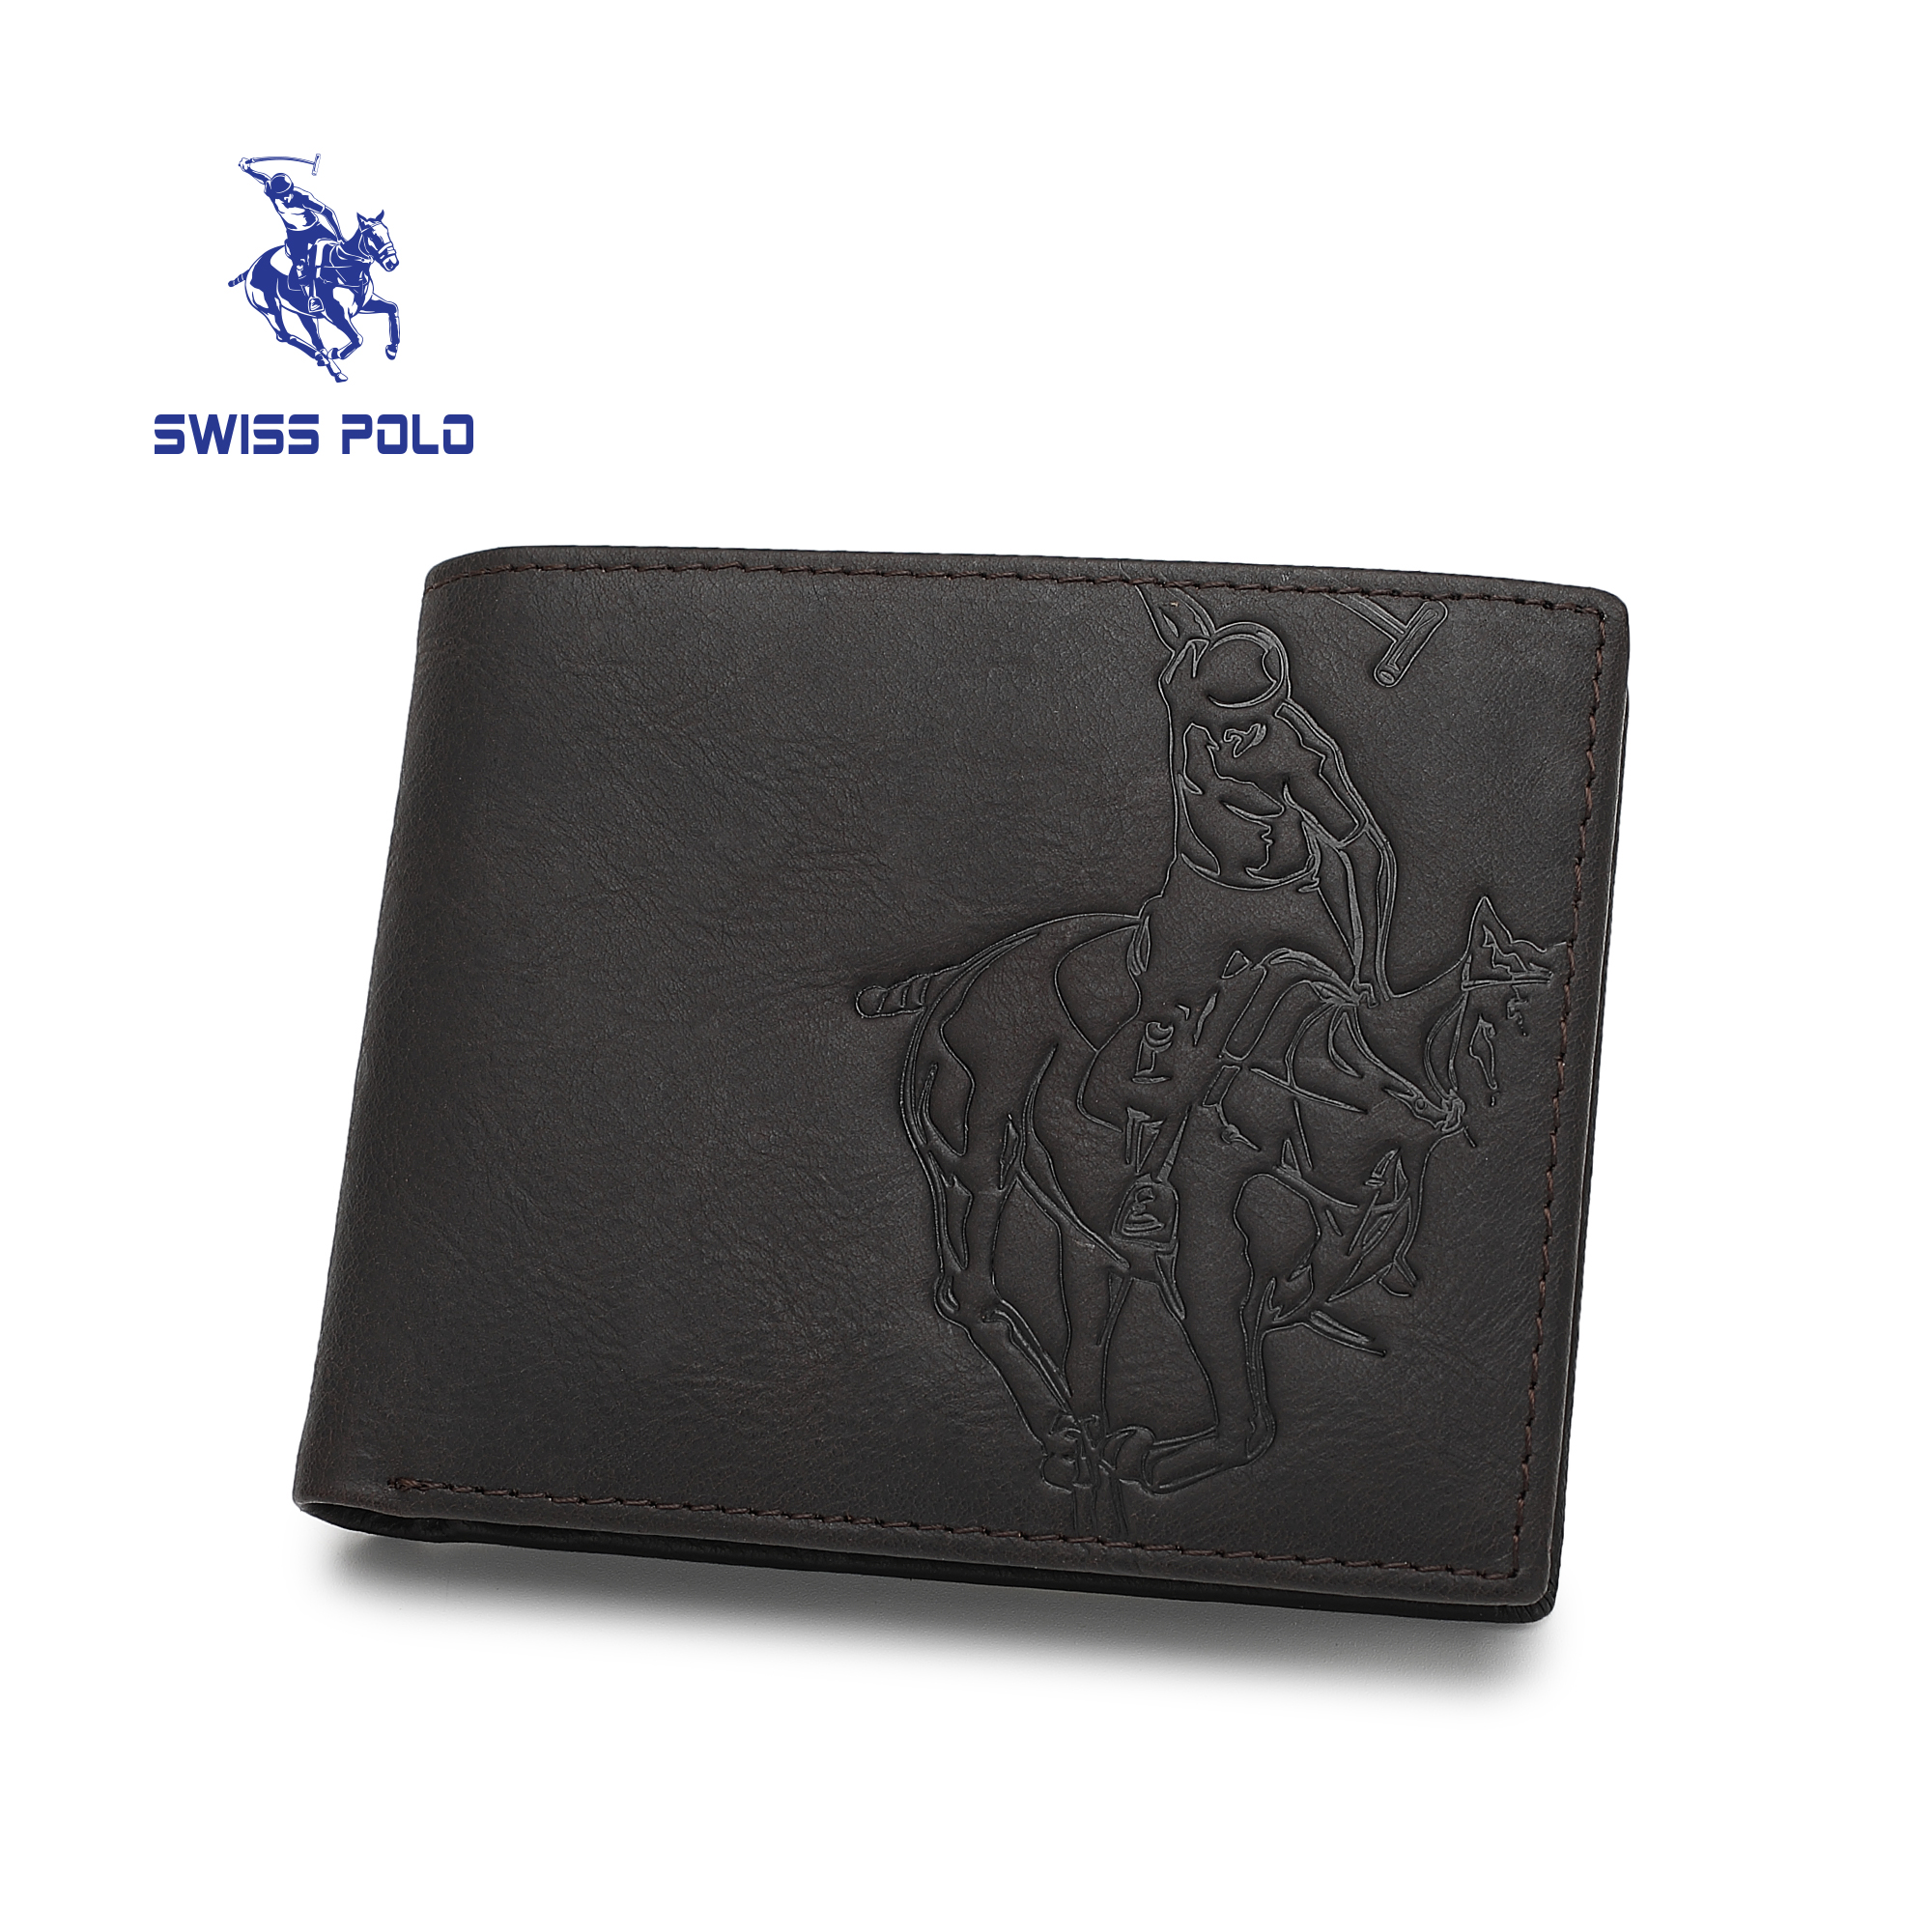 SWISS POLO Genuine Leather RFID Short Wallet SW 178-4 COFFEE